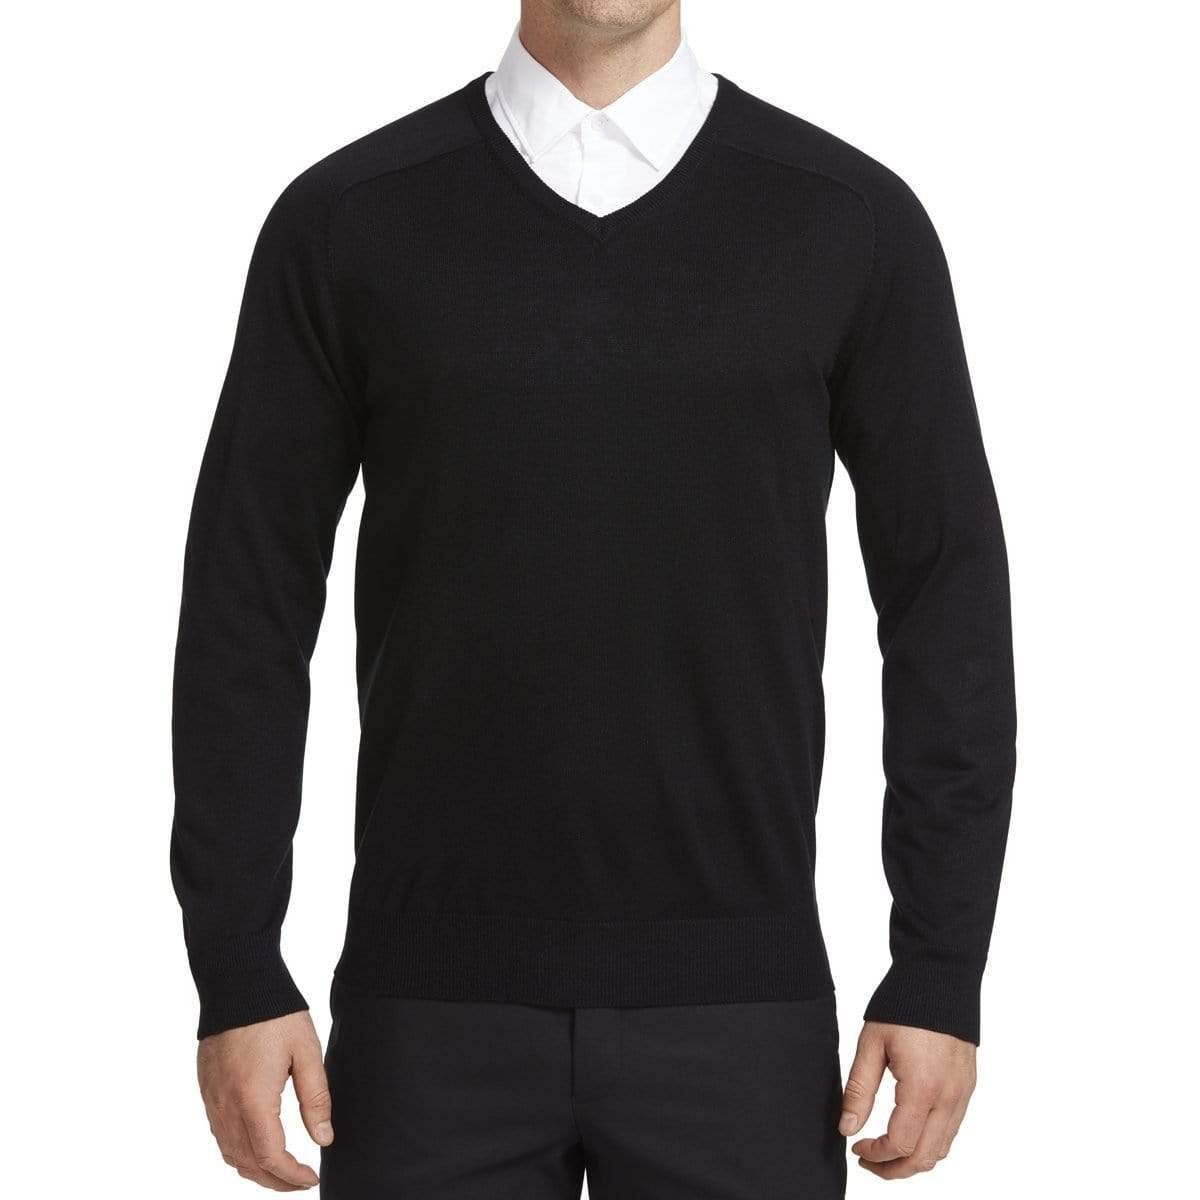 NNT Corporate Wear Black / S NNT V-Neck Sweater CATE33